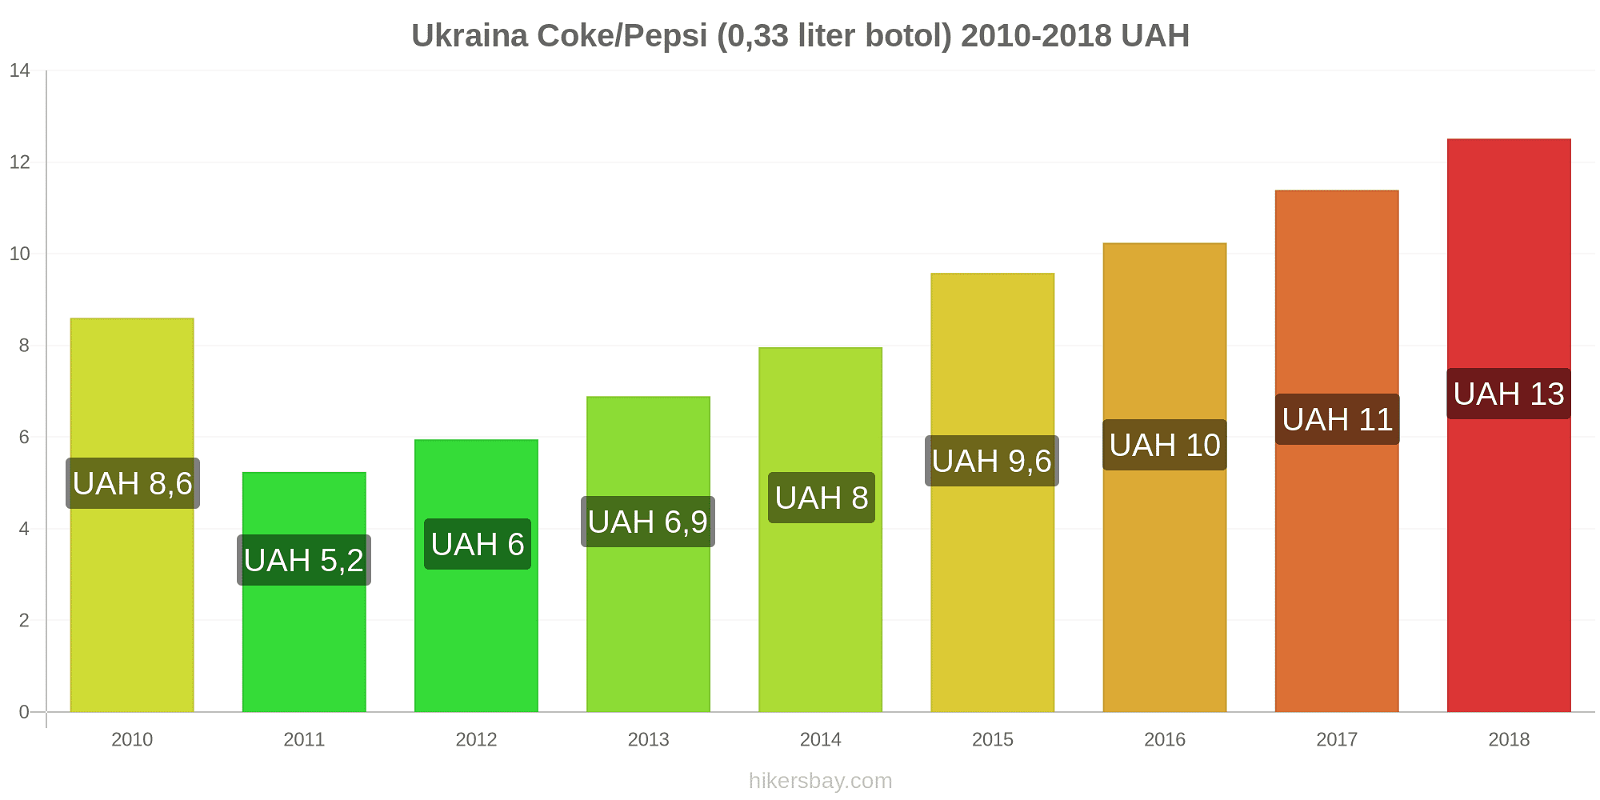 Ukraina perubahan harga Coca-Cola/Pepsi (botol 0.33 liter) hikersbay.com